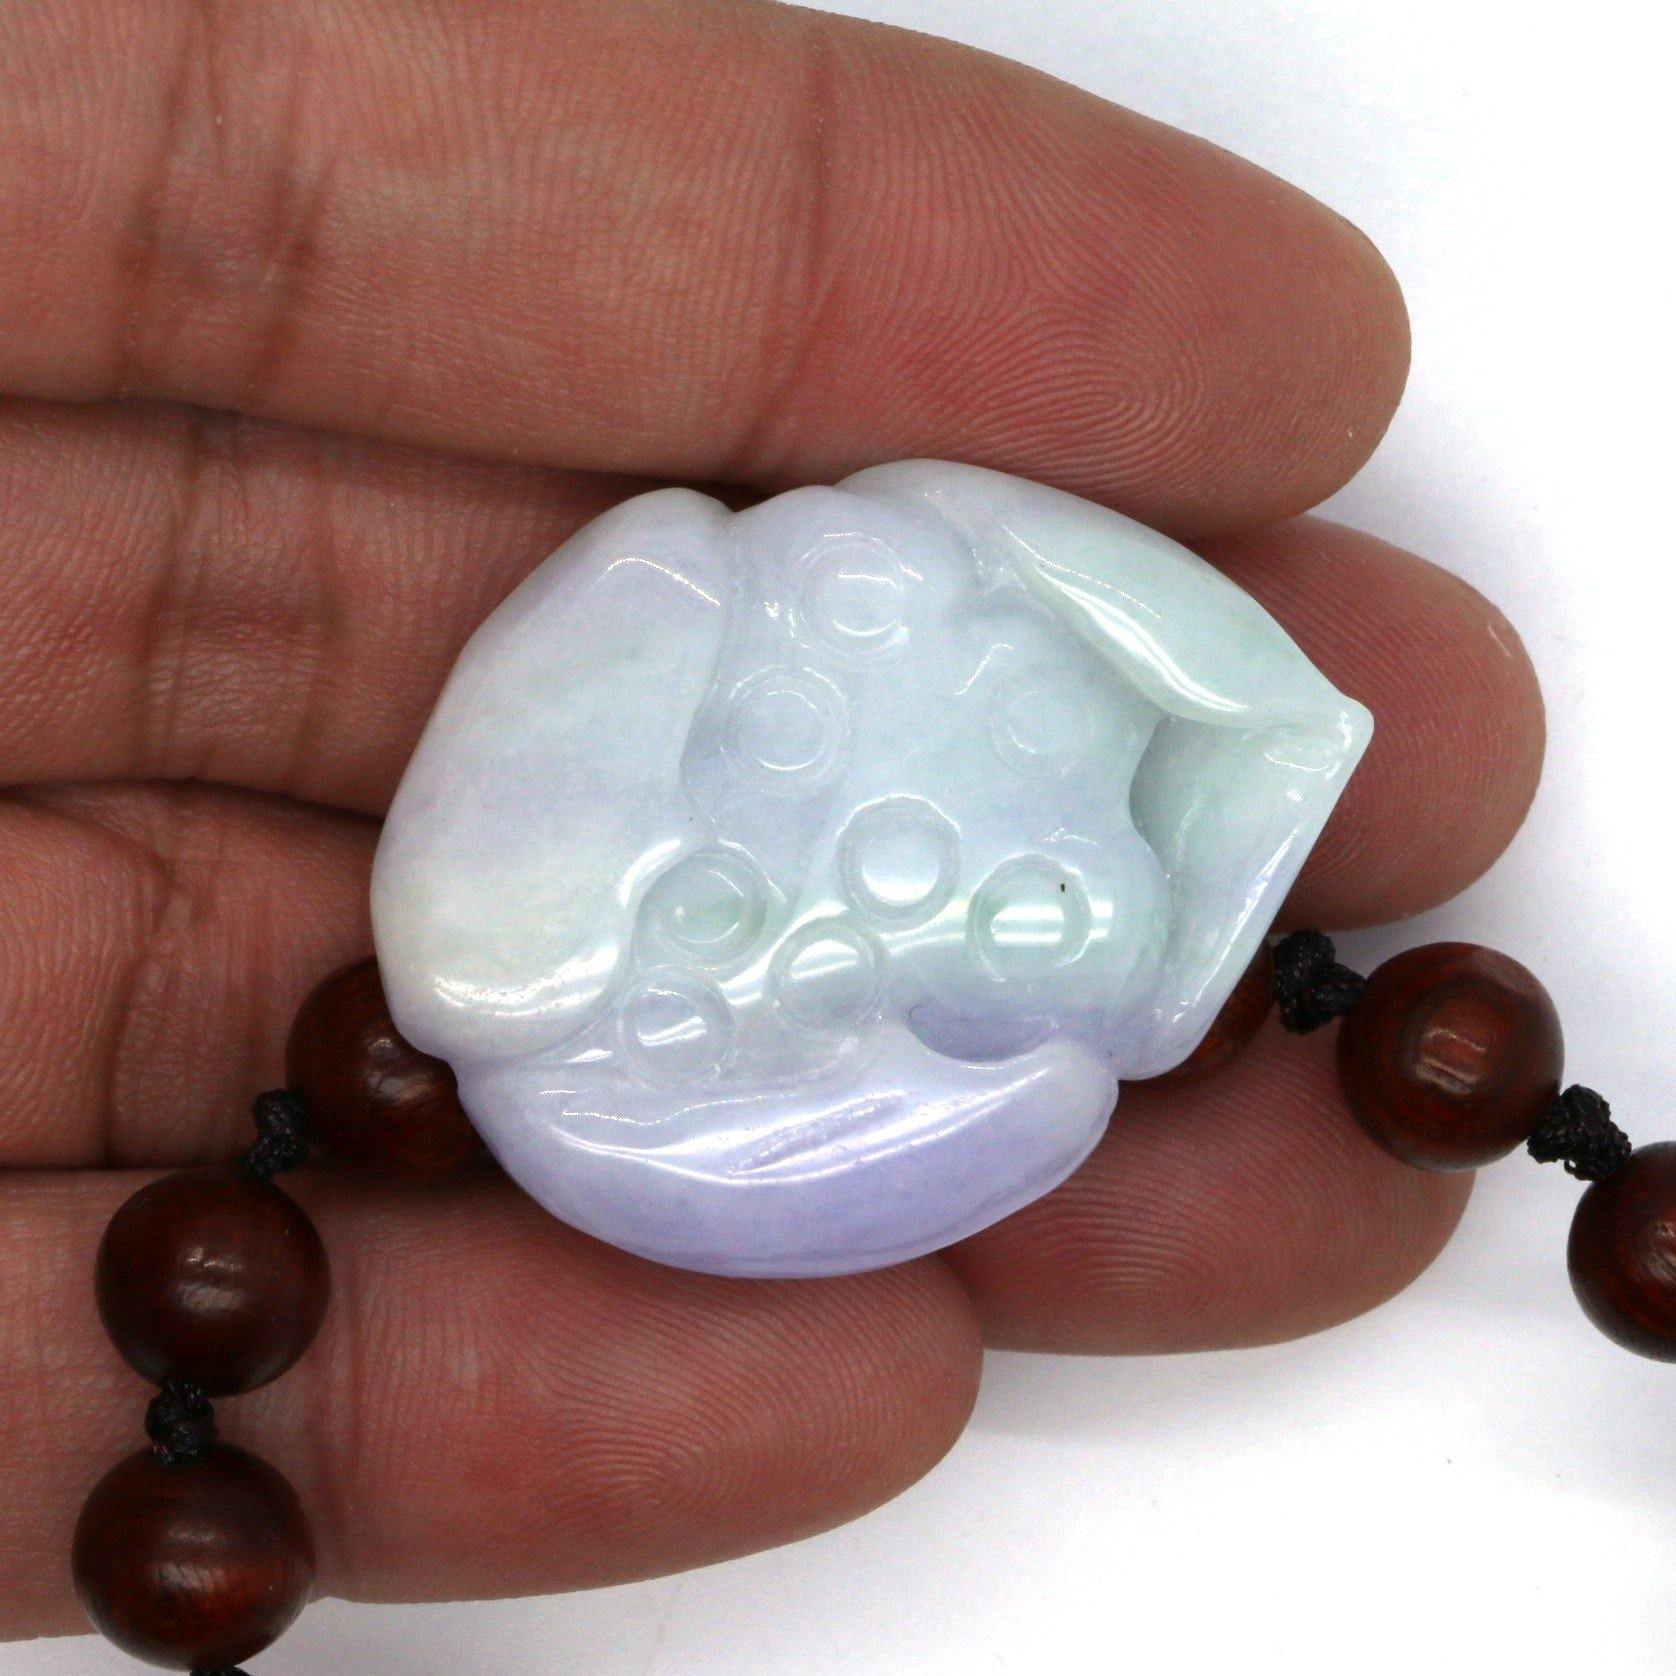 A Grade Jadeite Jade Necklace Item no B08SLP3Z2W - Jade-collector.com